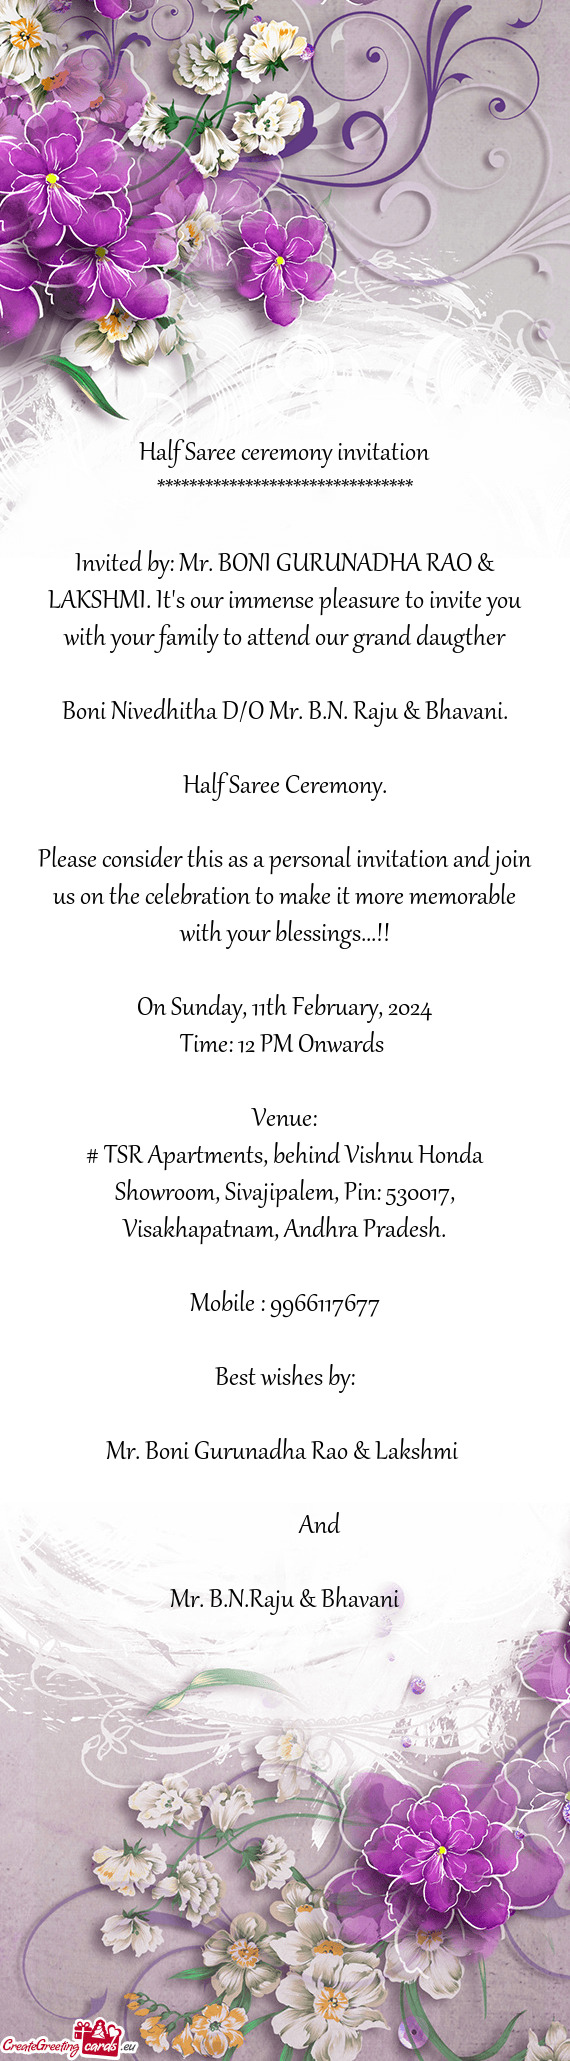 Invited by: Mr. BONI GURUNADHA RAO & LAKSHMI. It